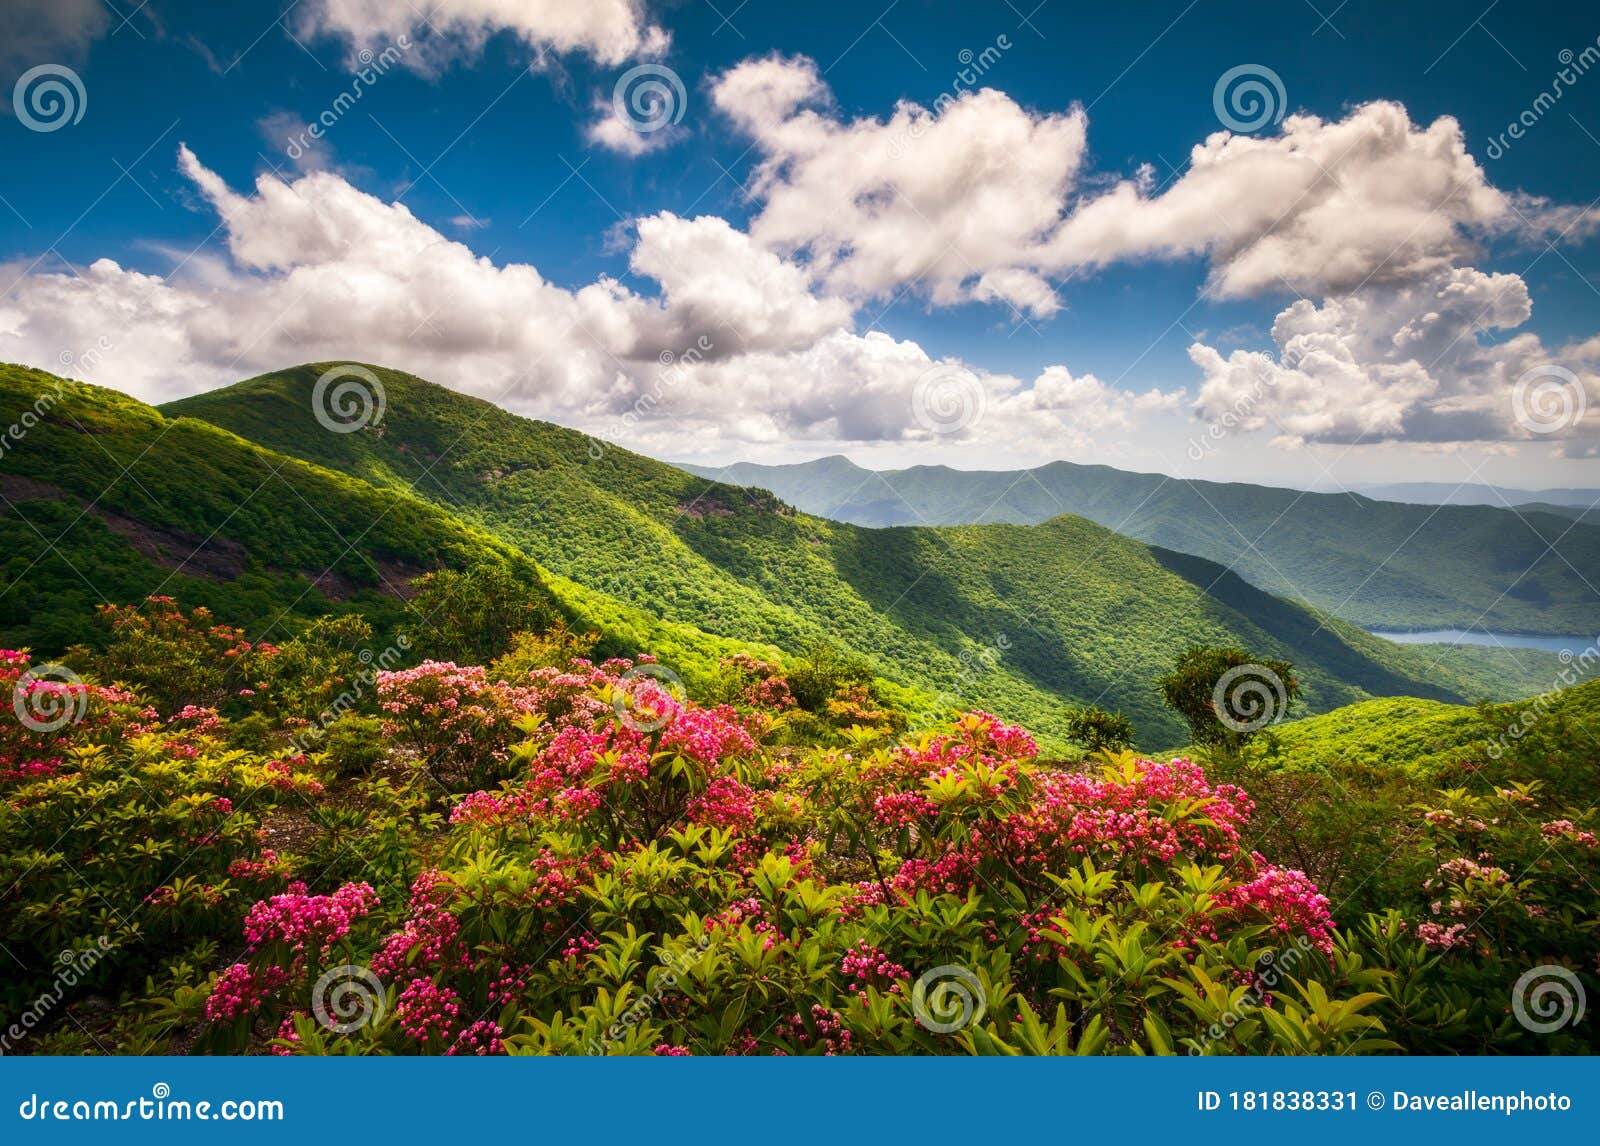 blue ridge parkway north carolina scenic summer flowers mountain landscape photography